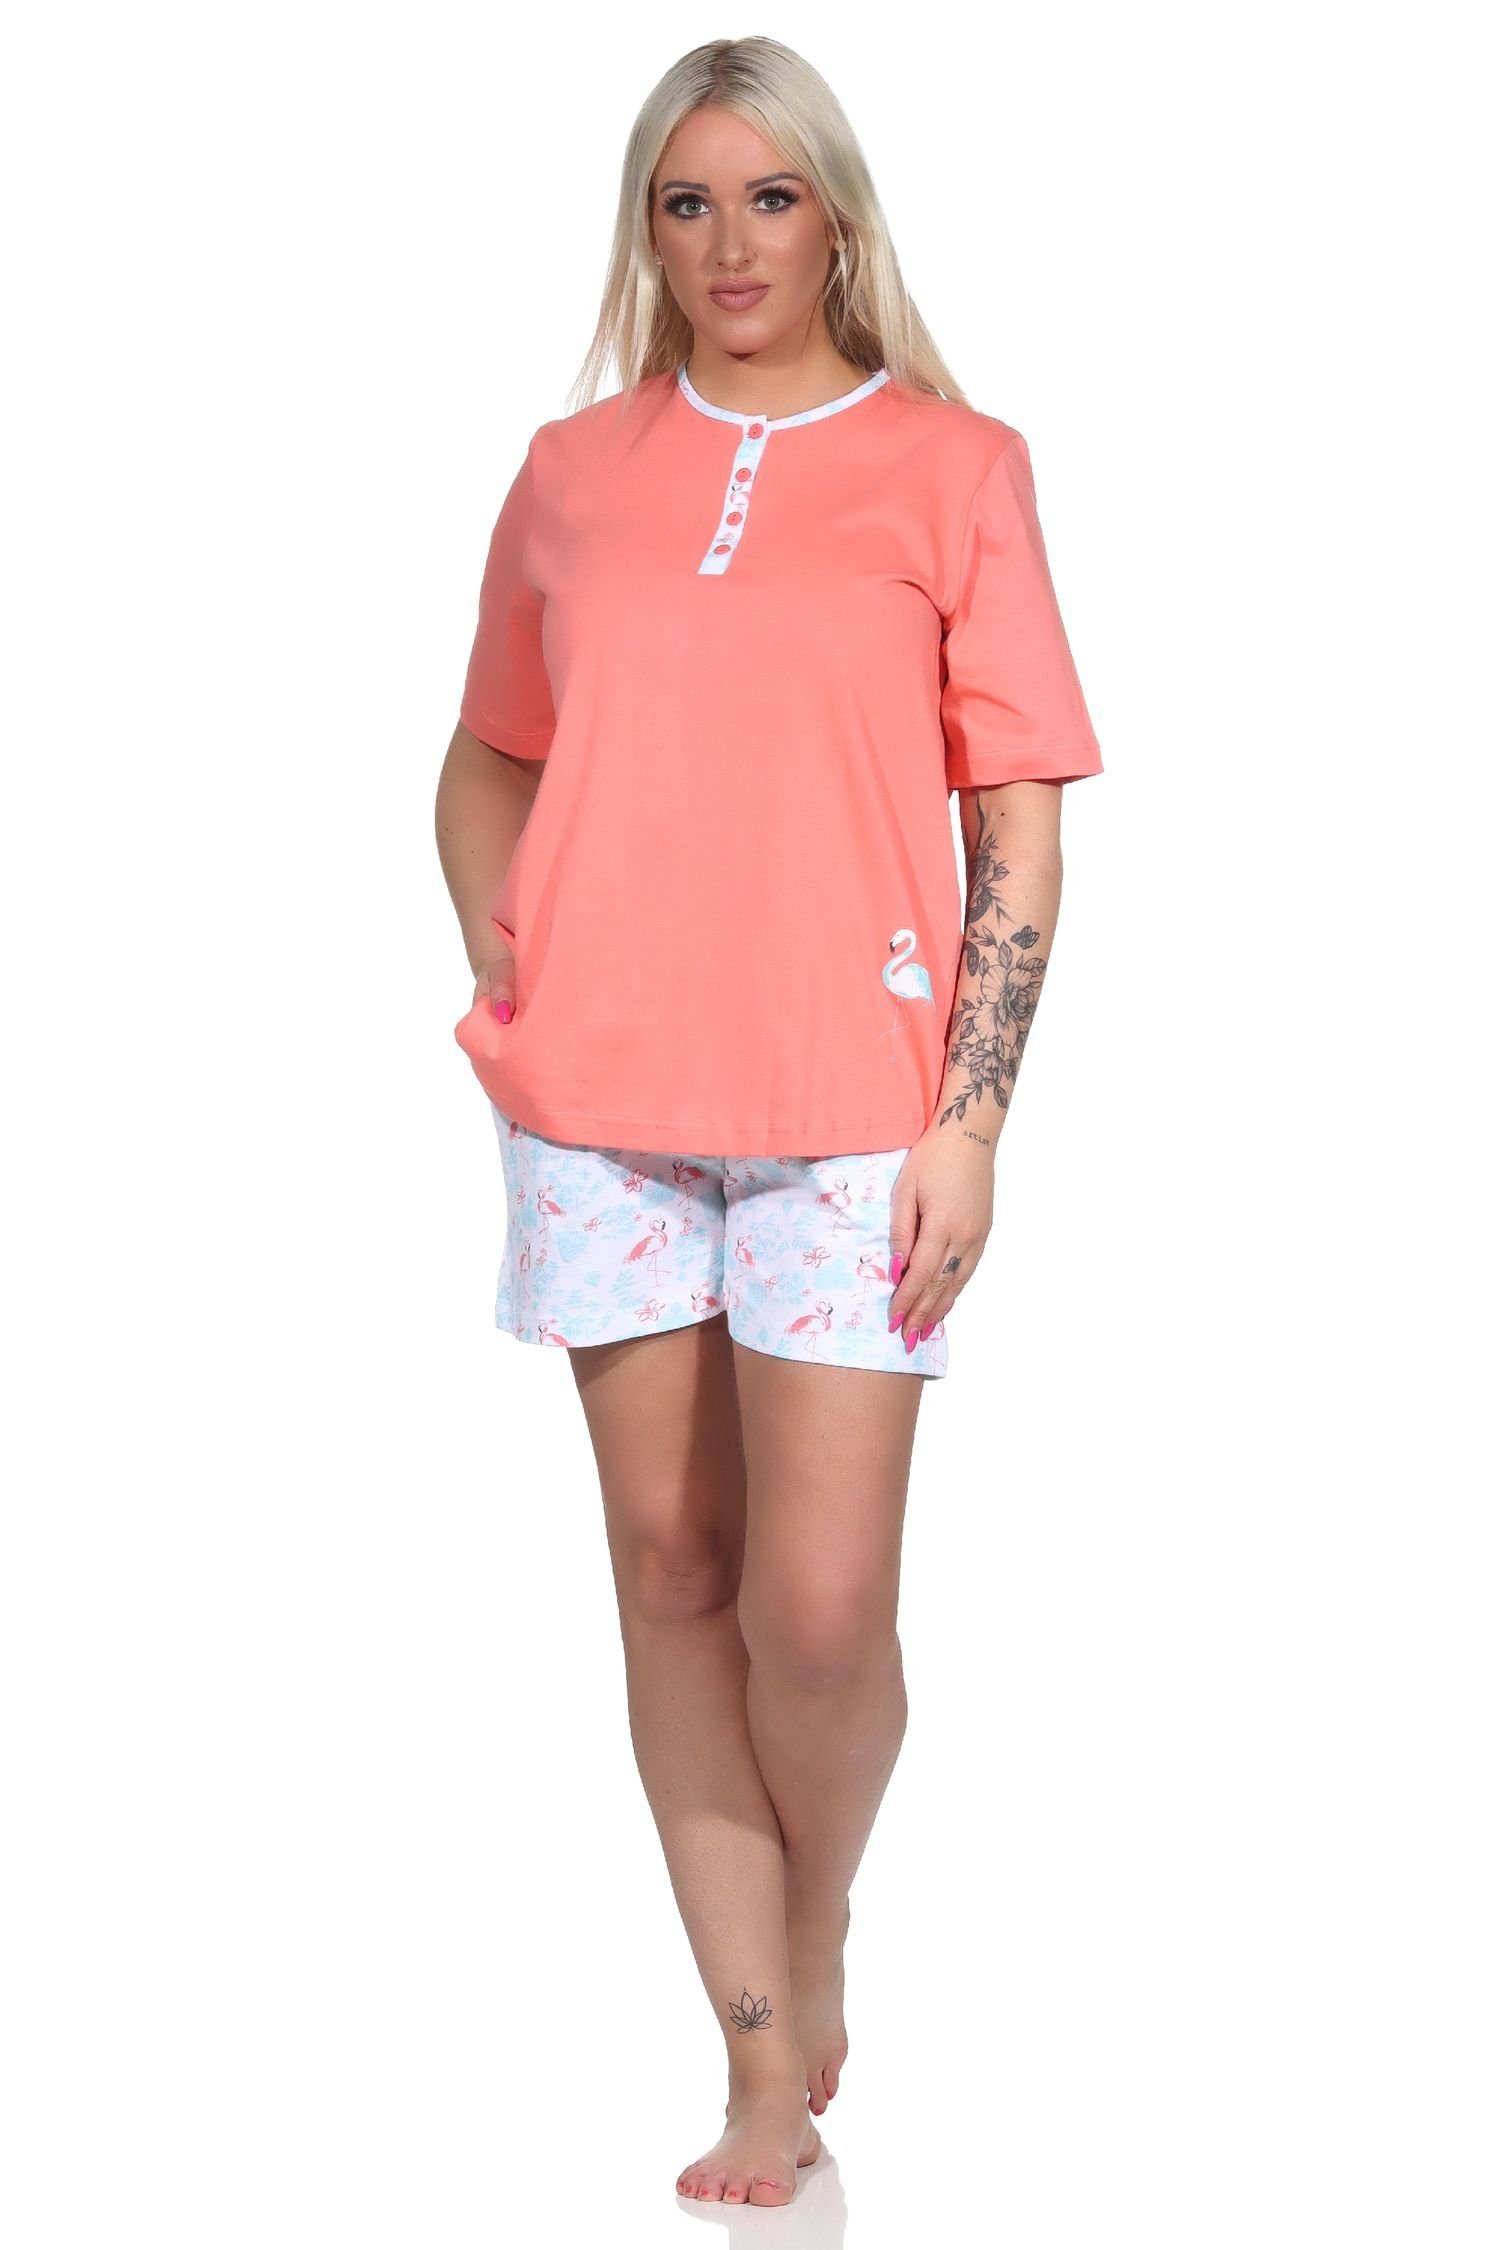 Normann Pyjama Damen Shorty kurzarm Schlafanzug mit Flamingo Motiv apricot